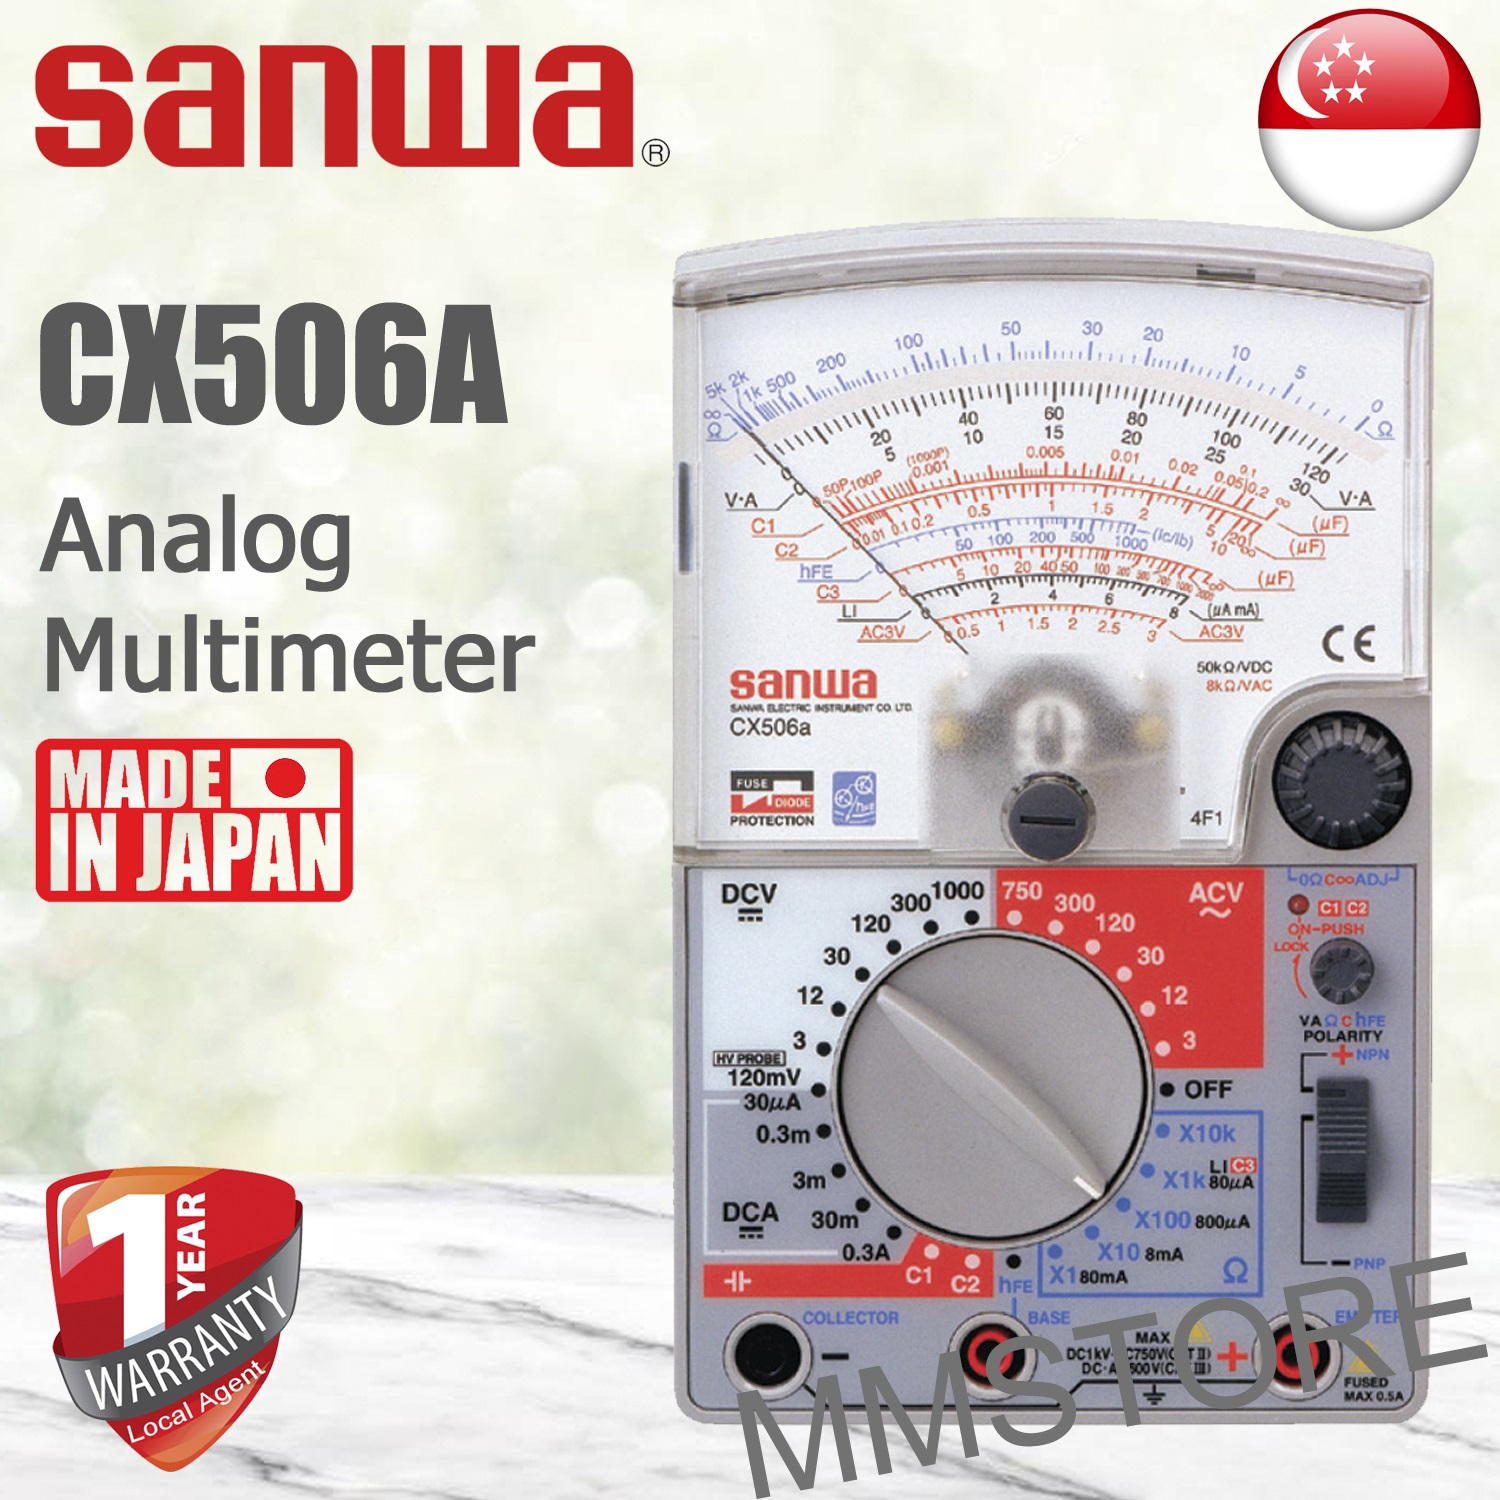 SANWA MODEL CX506a Analog Multimeter